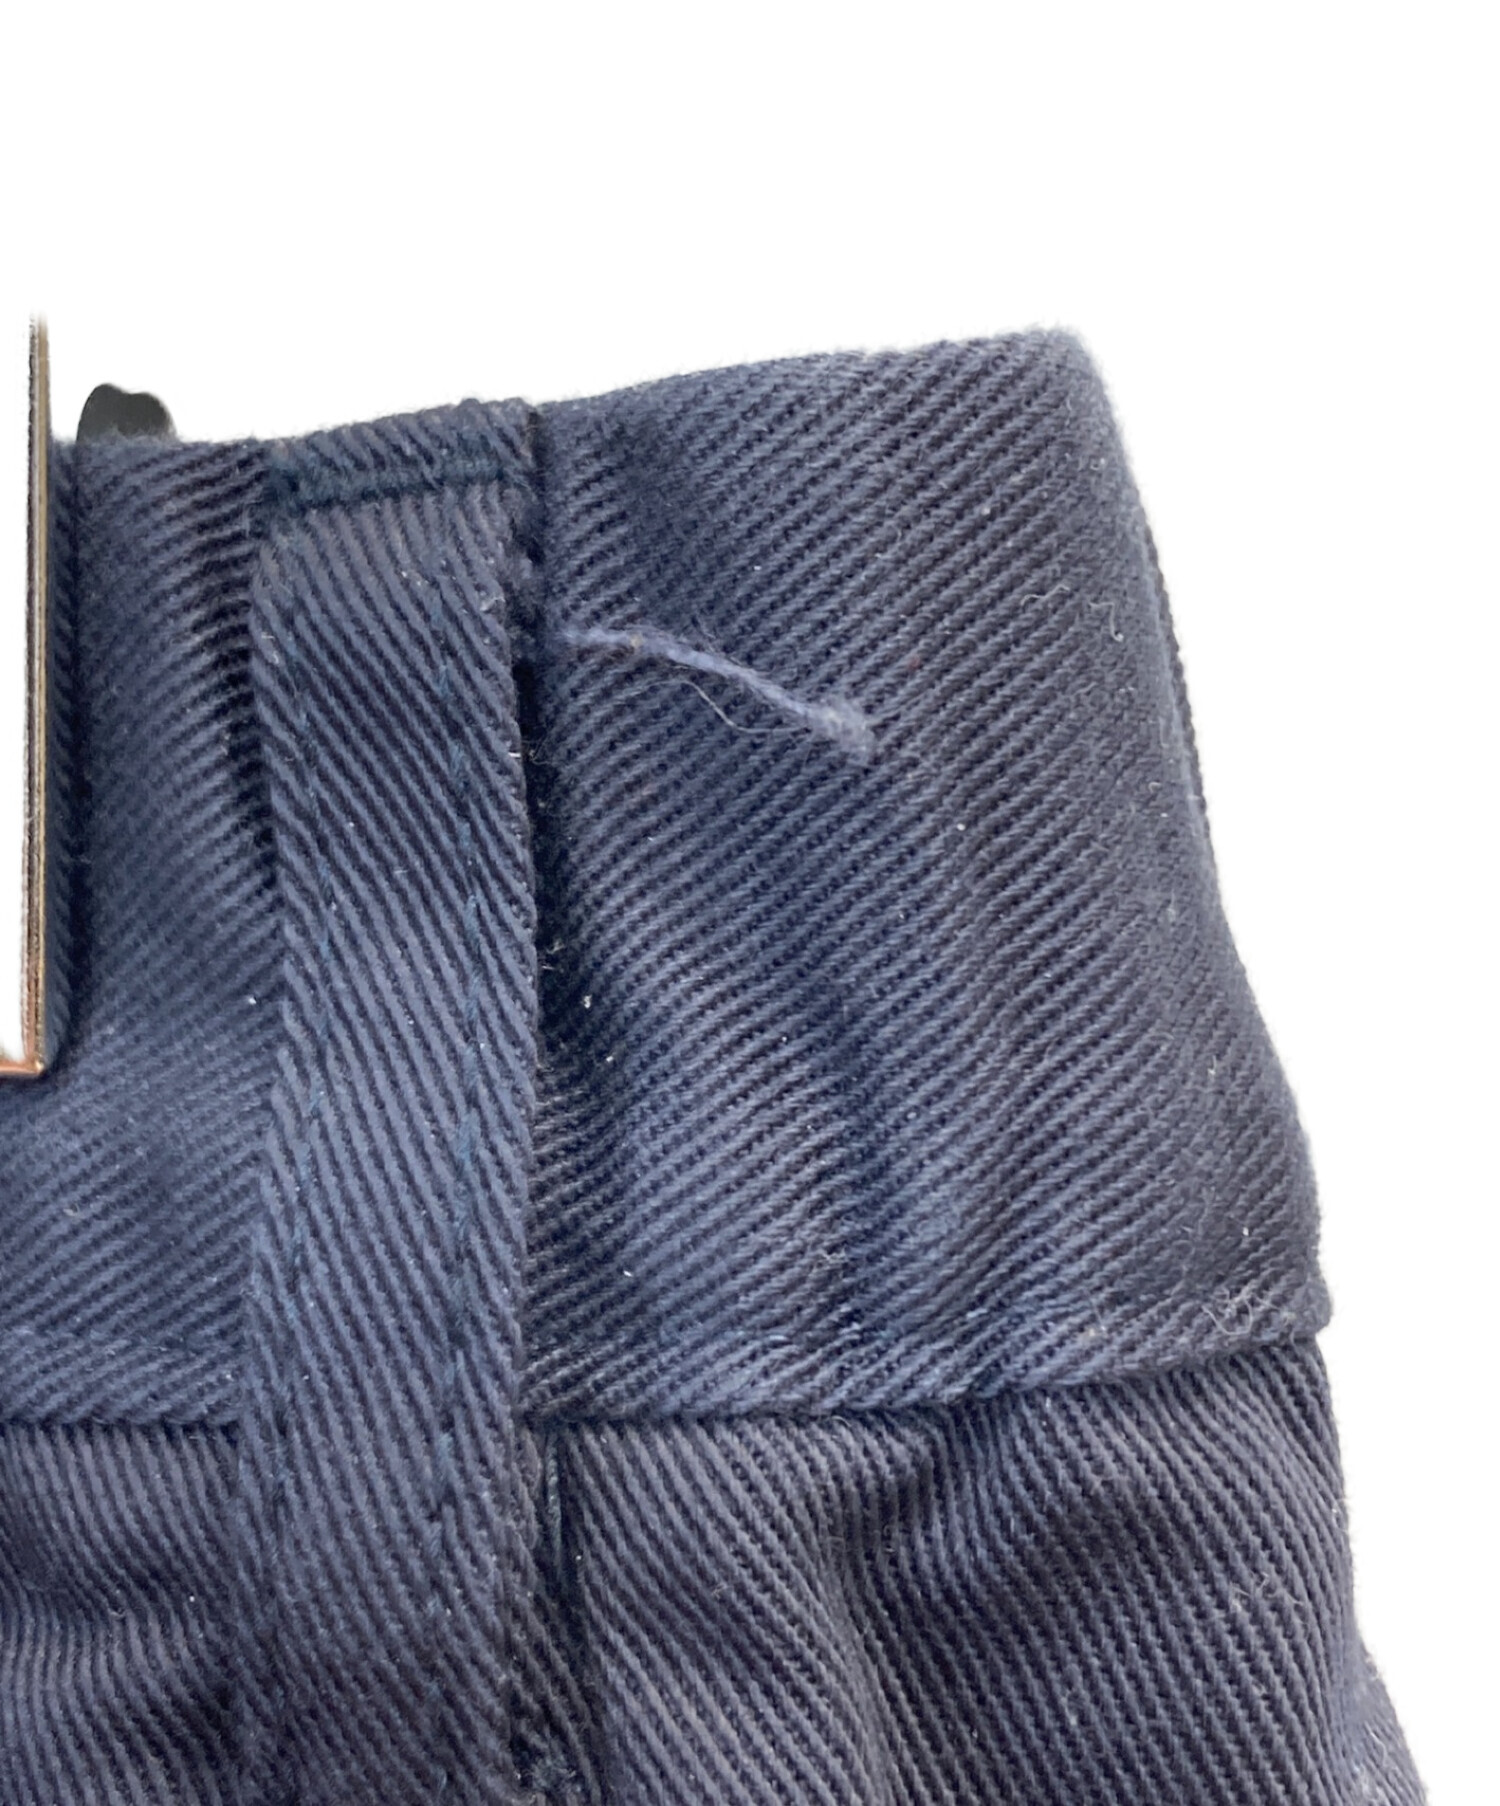 TapWater (タップウォーター) Cotton Chino Tuck Trousers / チノタックトラウザーズ ネイビー サイズ:36